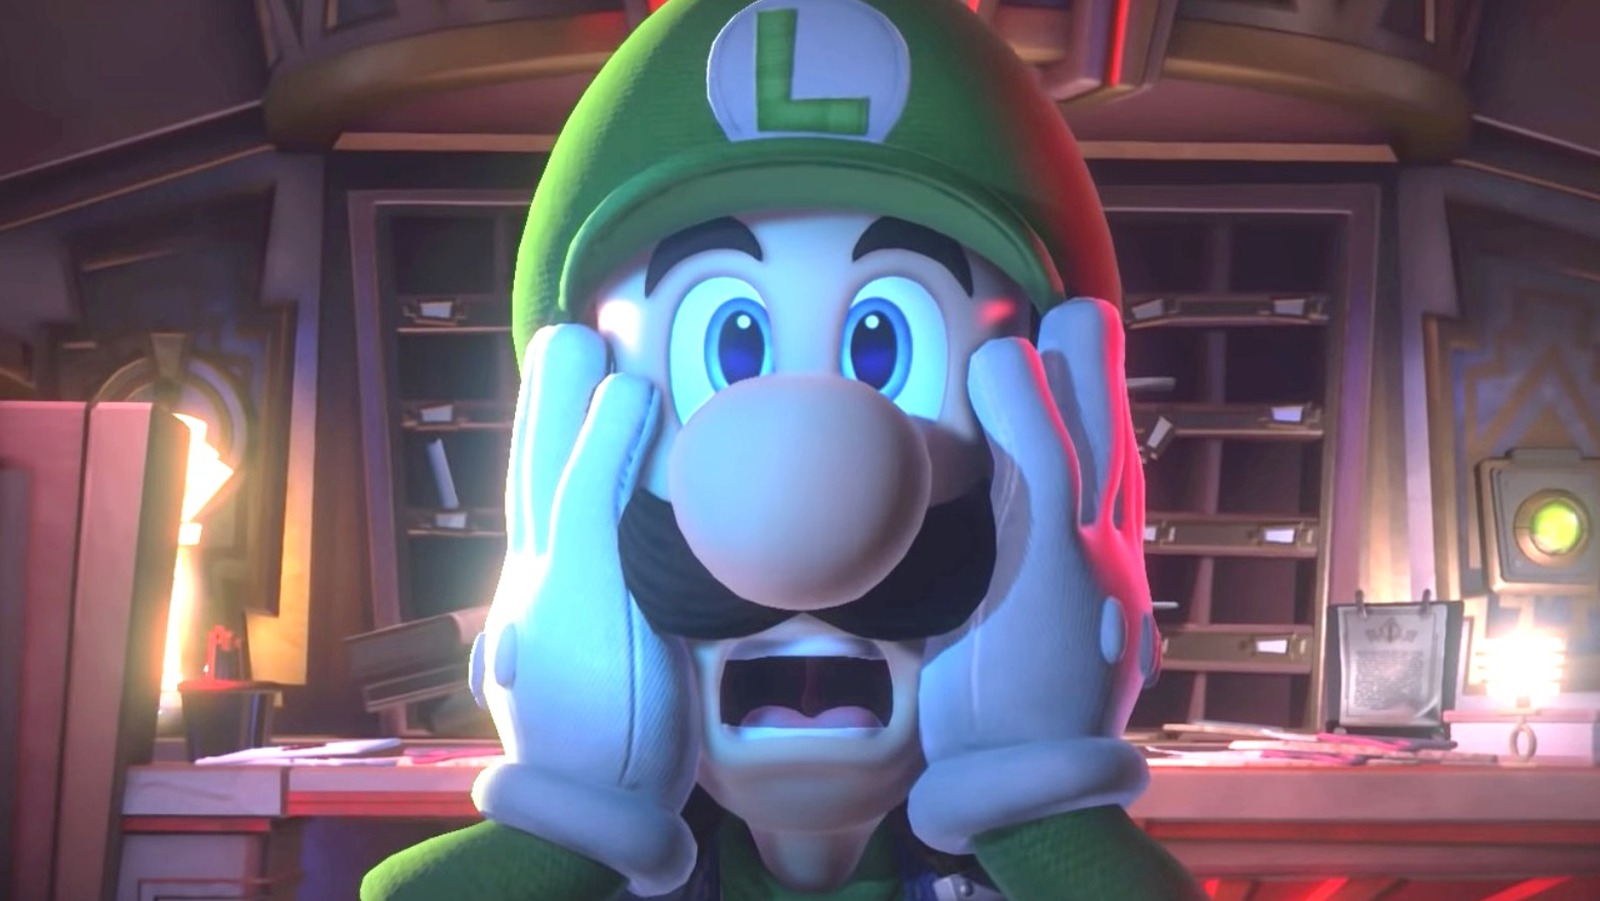 Luigi's Mansion 4 The Horror Express! [New Game Idea] 